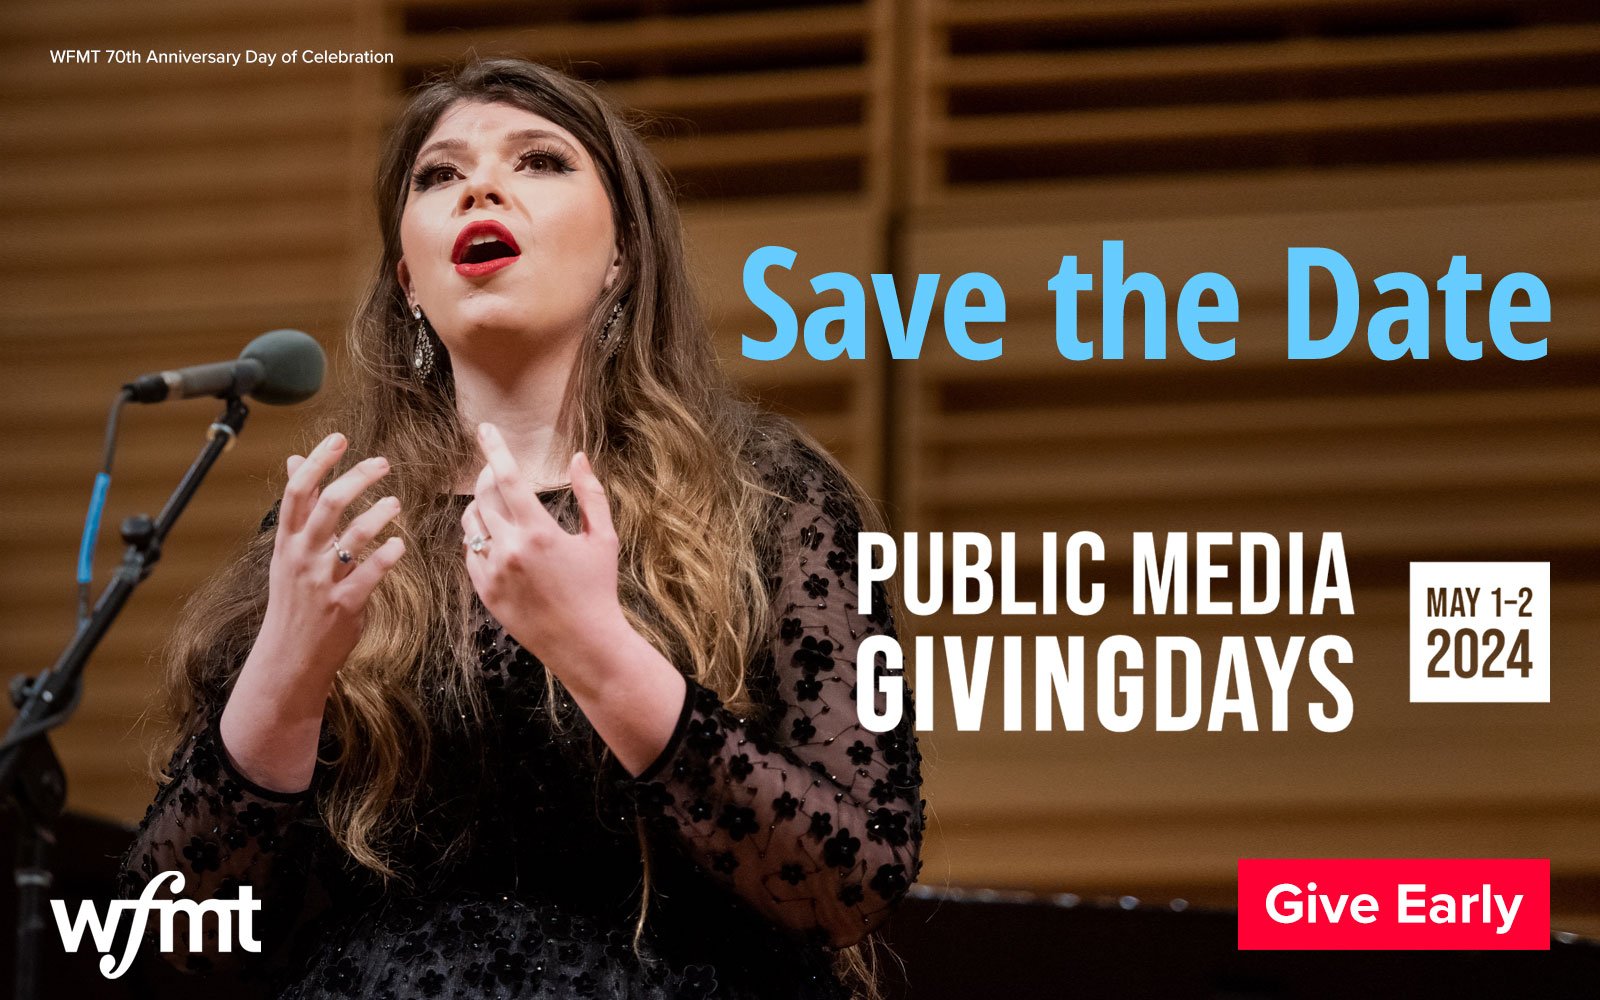 Support the WFMT during Public Media GivingDays!